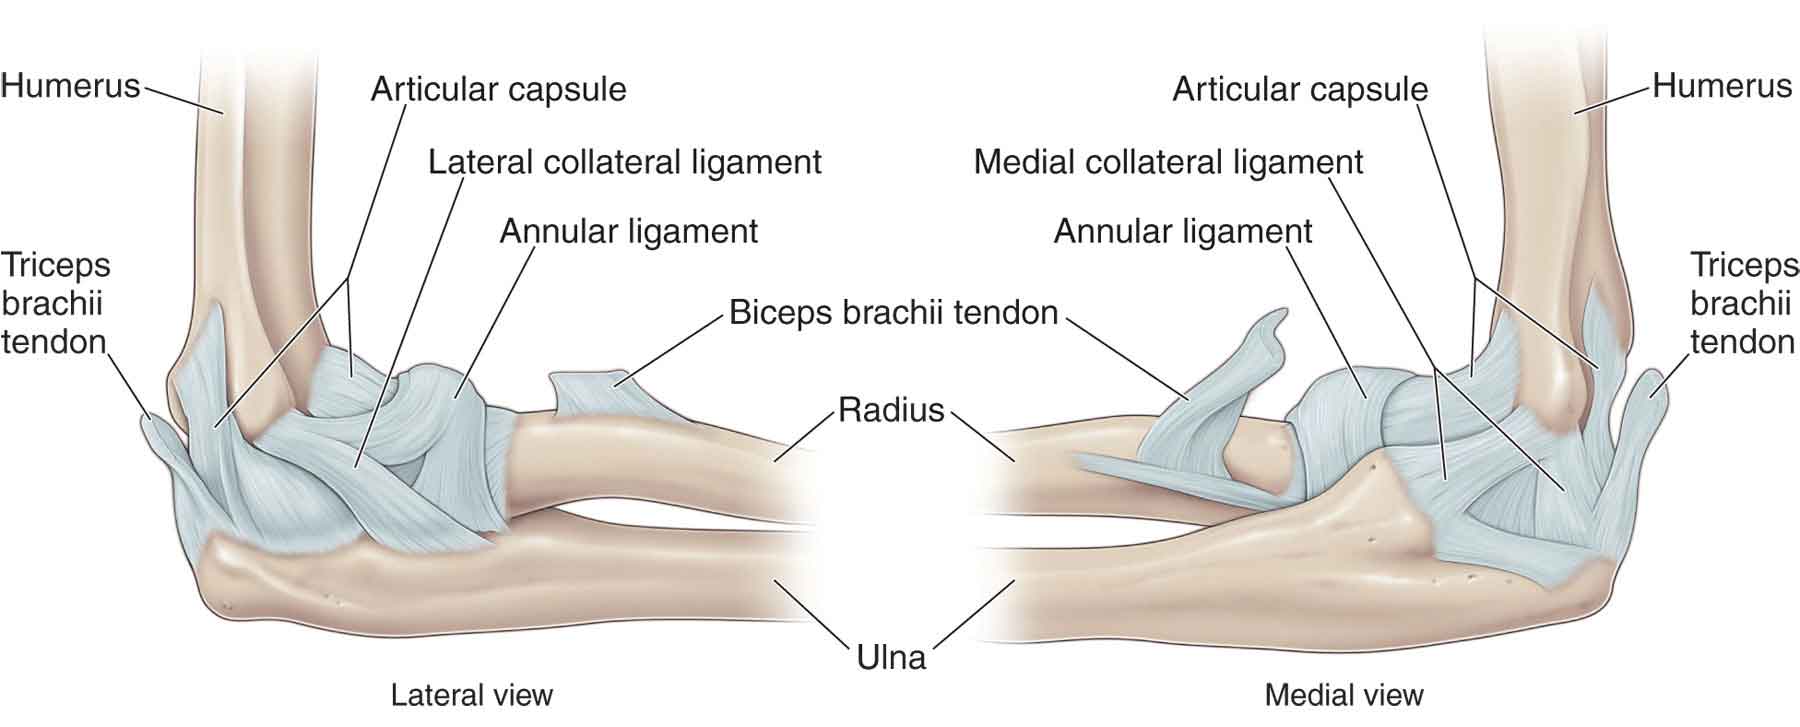 Arcuate Ligament Elbow